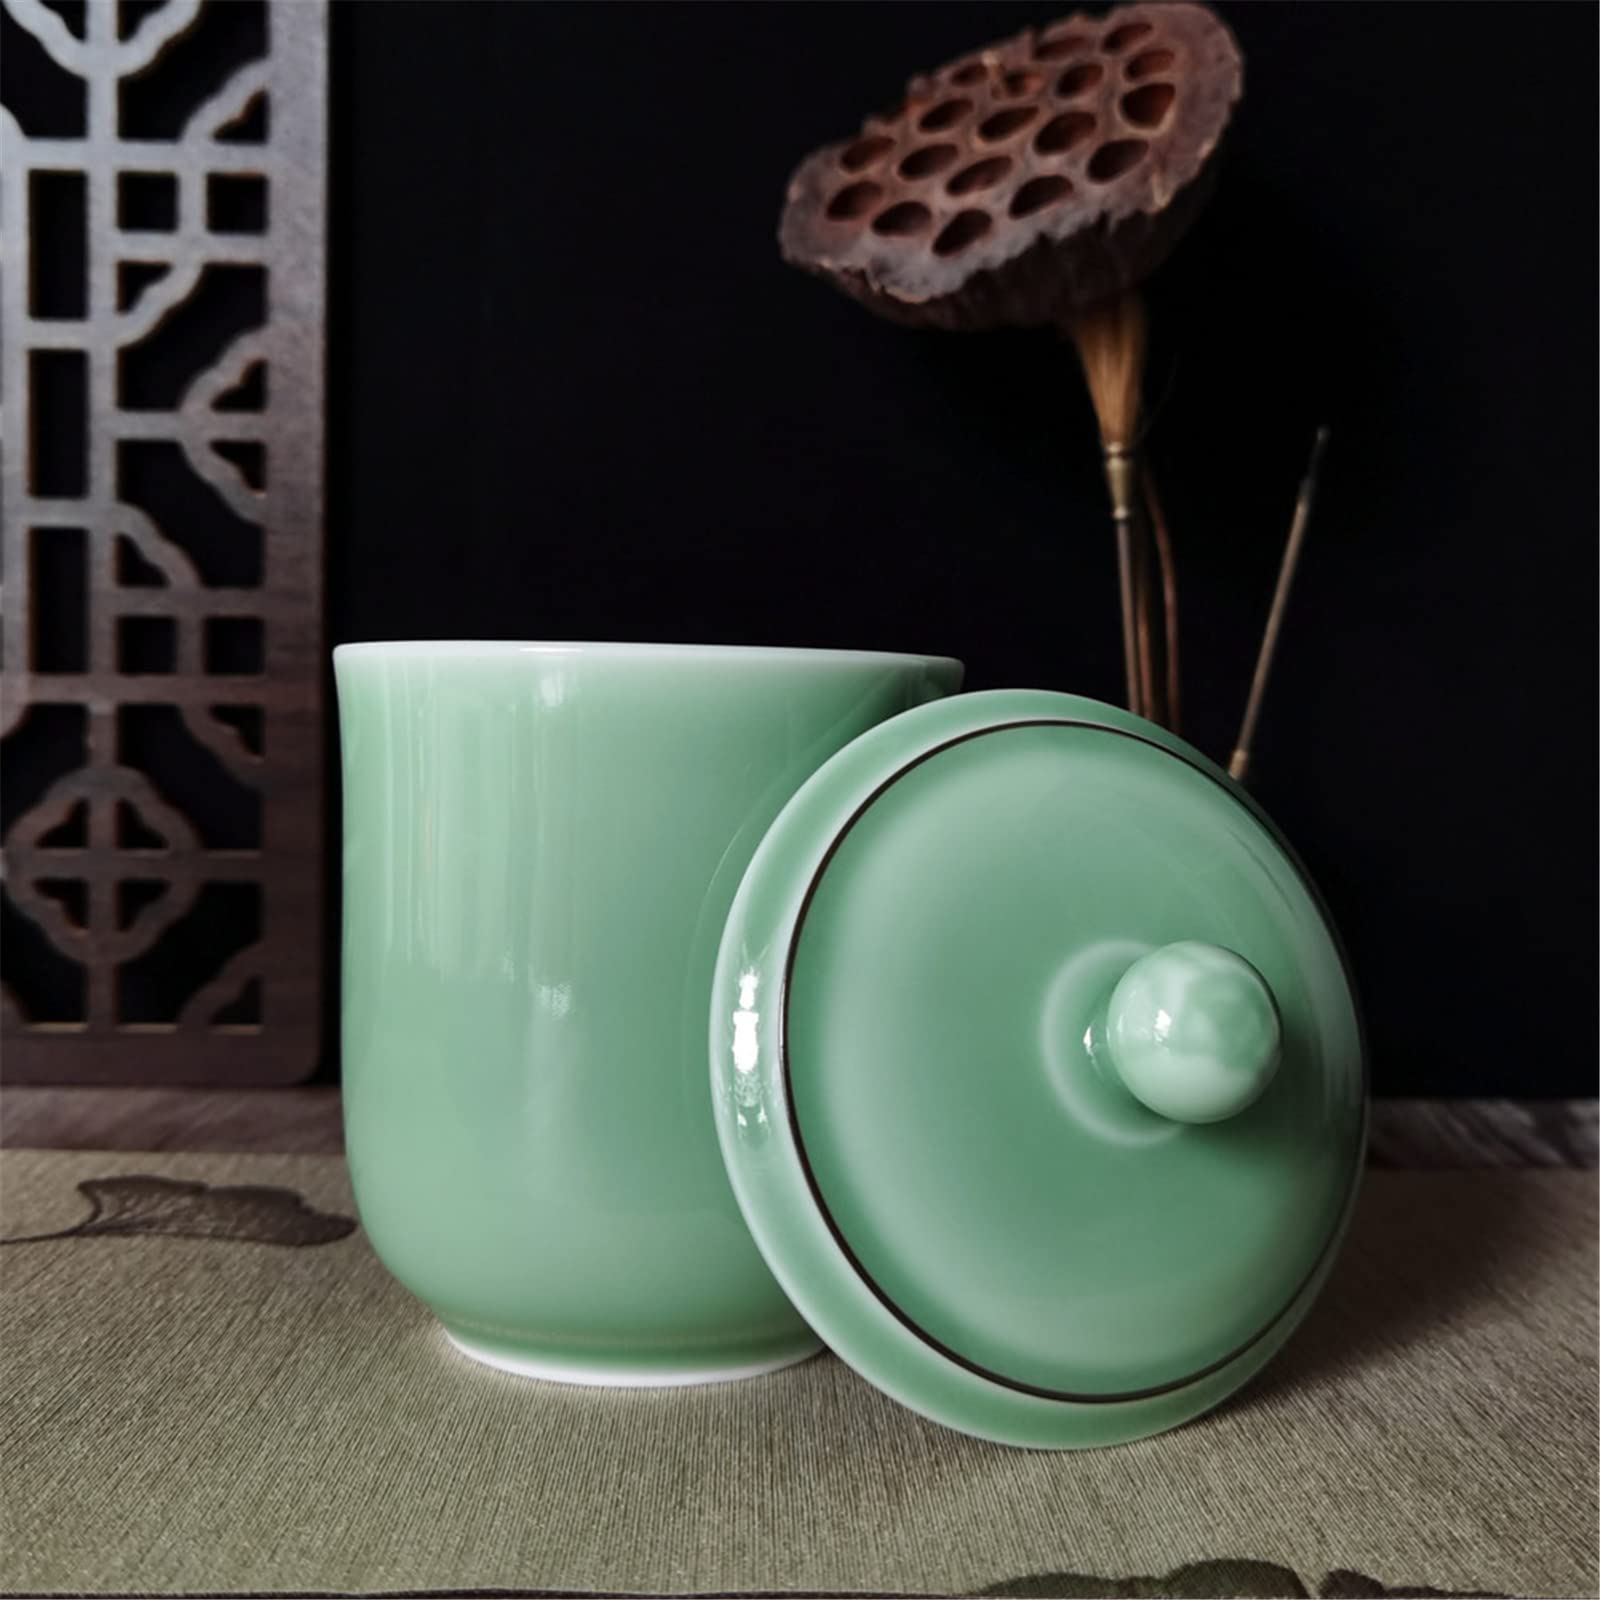 Handmade Celadon Coffee Mug Teacup with Lid 13oz Porcelain Milk Cup Smooth Glazed Ceramic Microwave and Dishwasher Safe (Green)